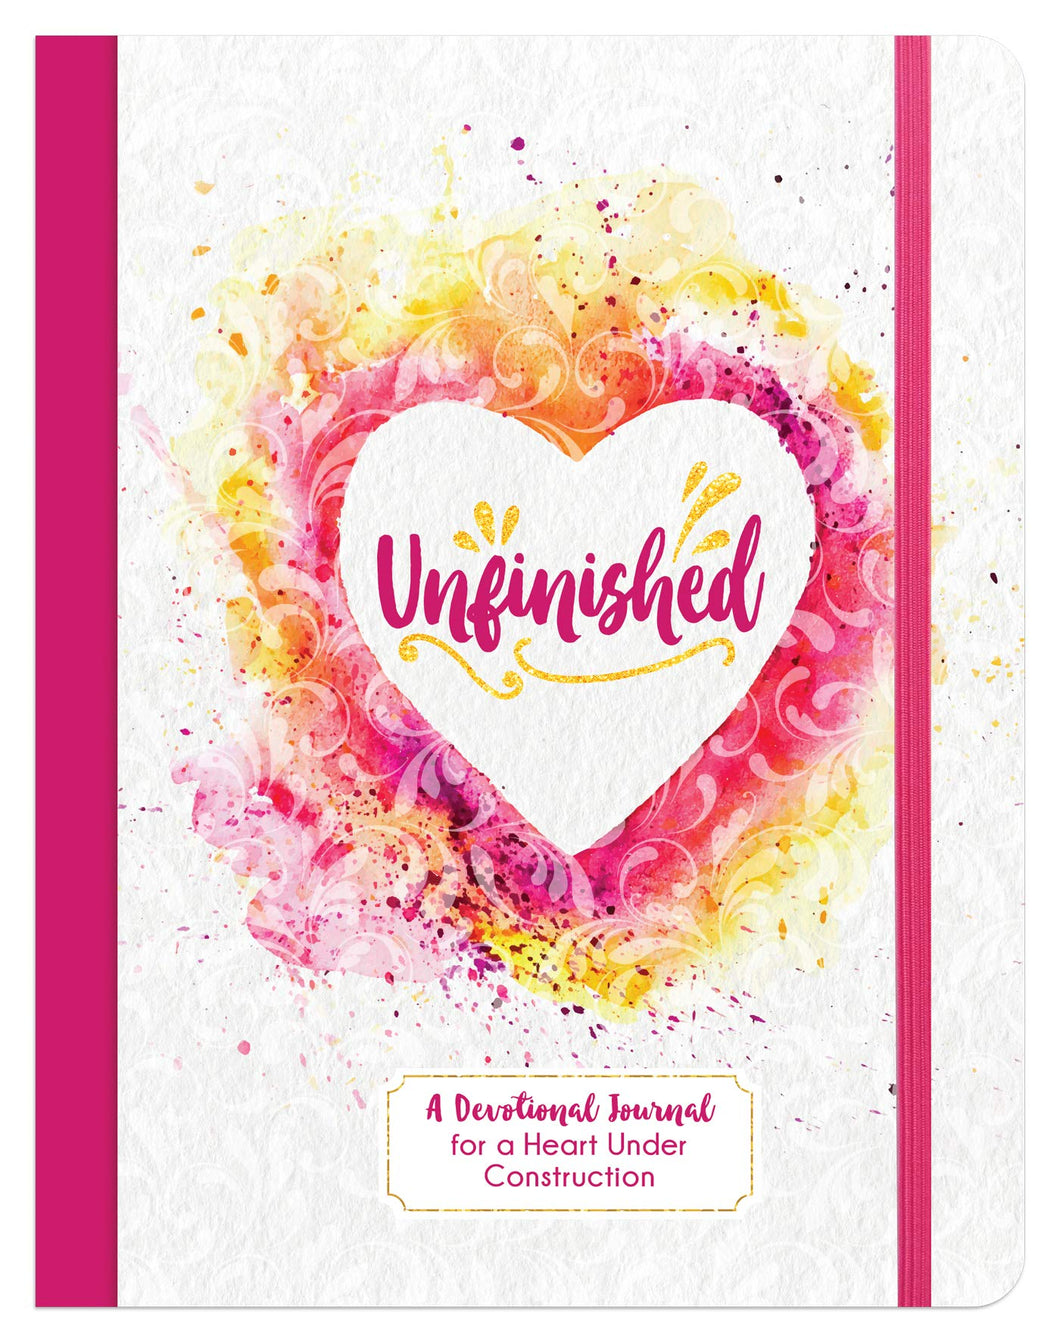 Devotional Journal - Unfinished: A Devotional Journal for a Heart Under Construction